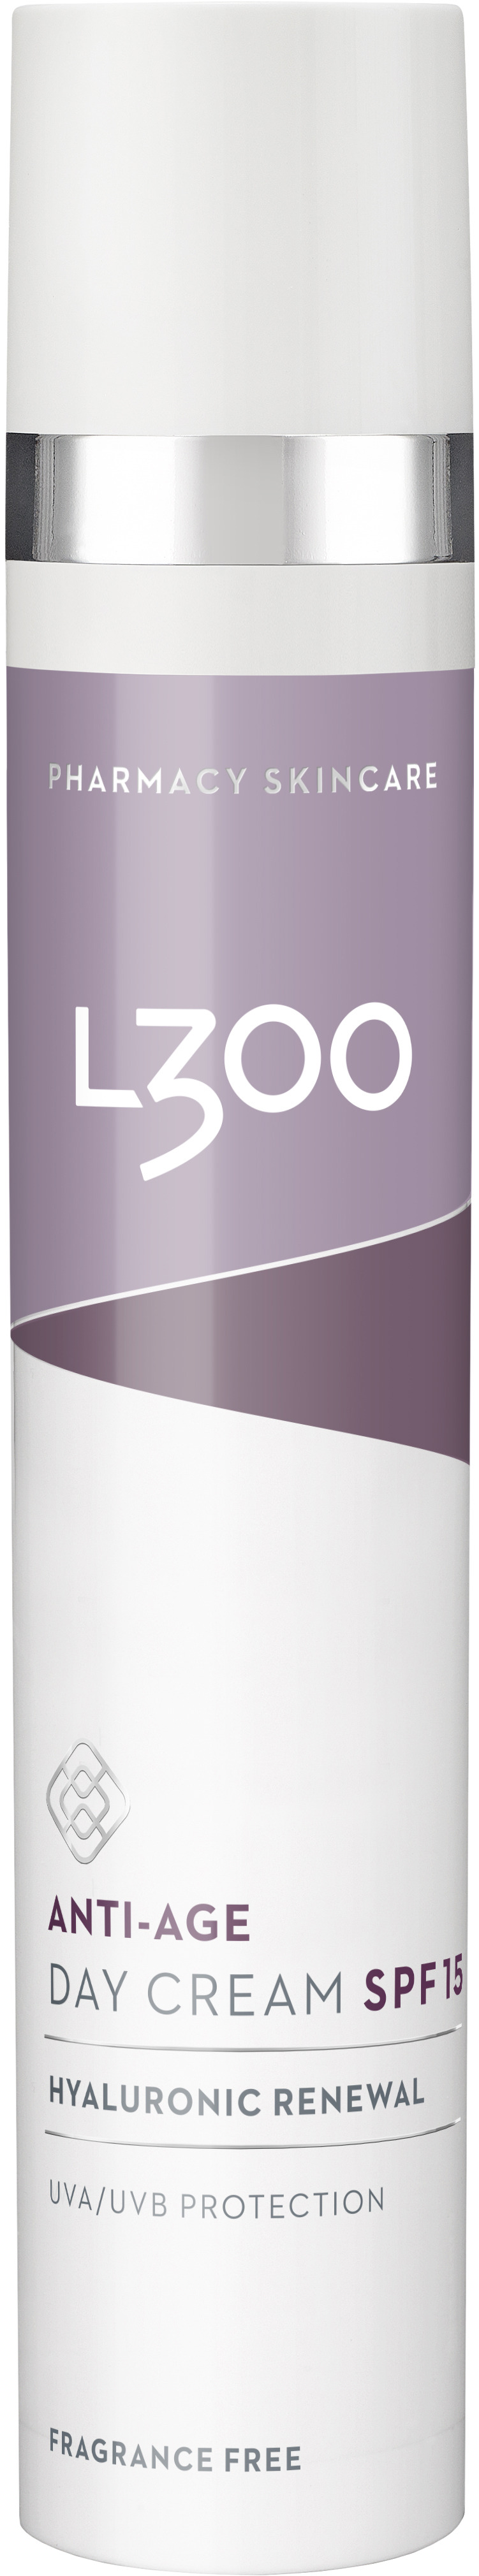 L300 Hyaluronic Renewal Anti-Age SPF15 Day Cream 50 ml